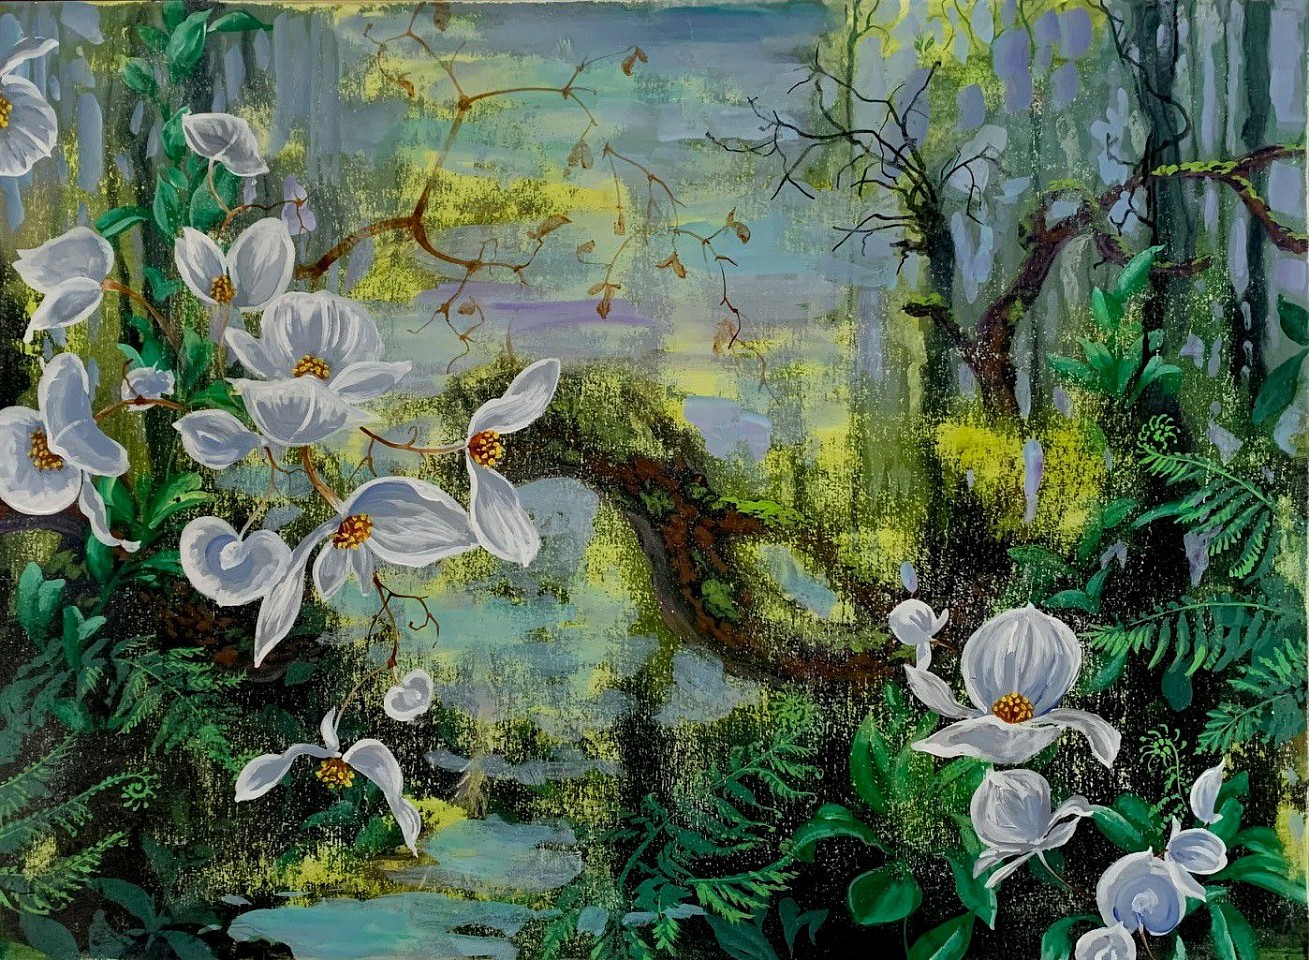 Chris Reilly, Wild Begonias, 2022
Acrylic on panel, 22 x 30 in. (55.9 x 76.2 cm)
08343